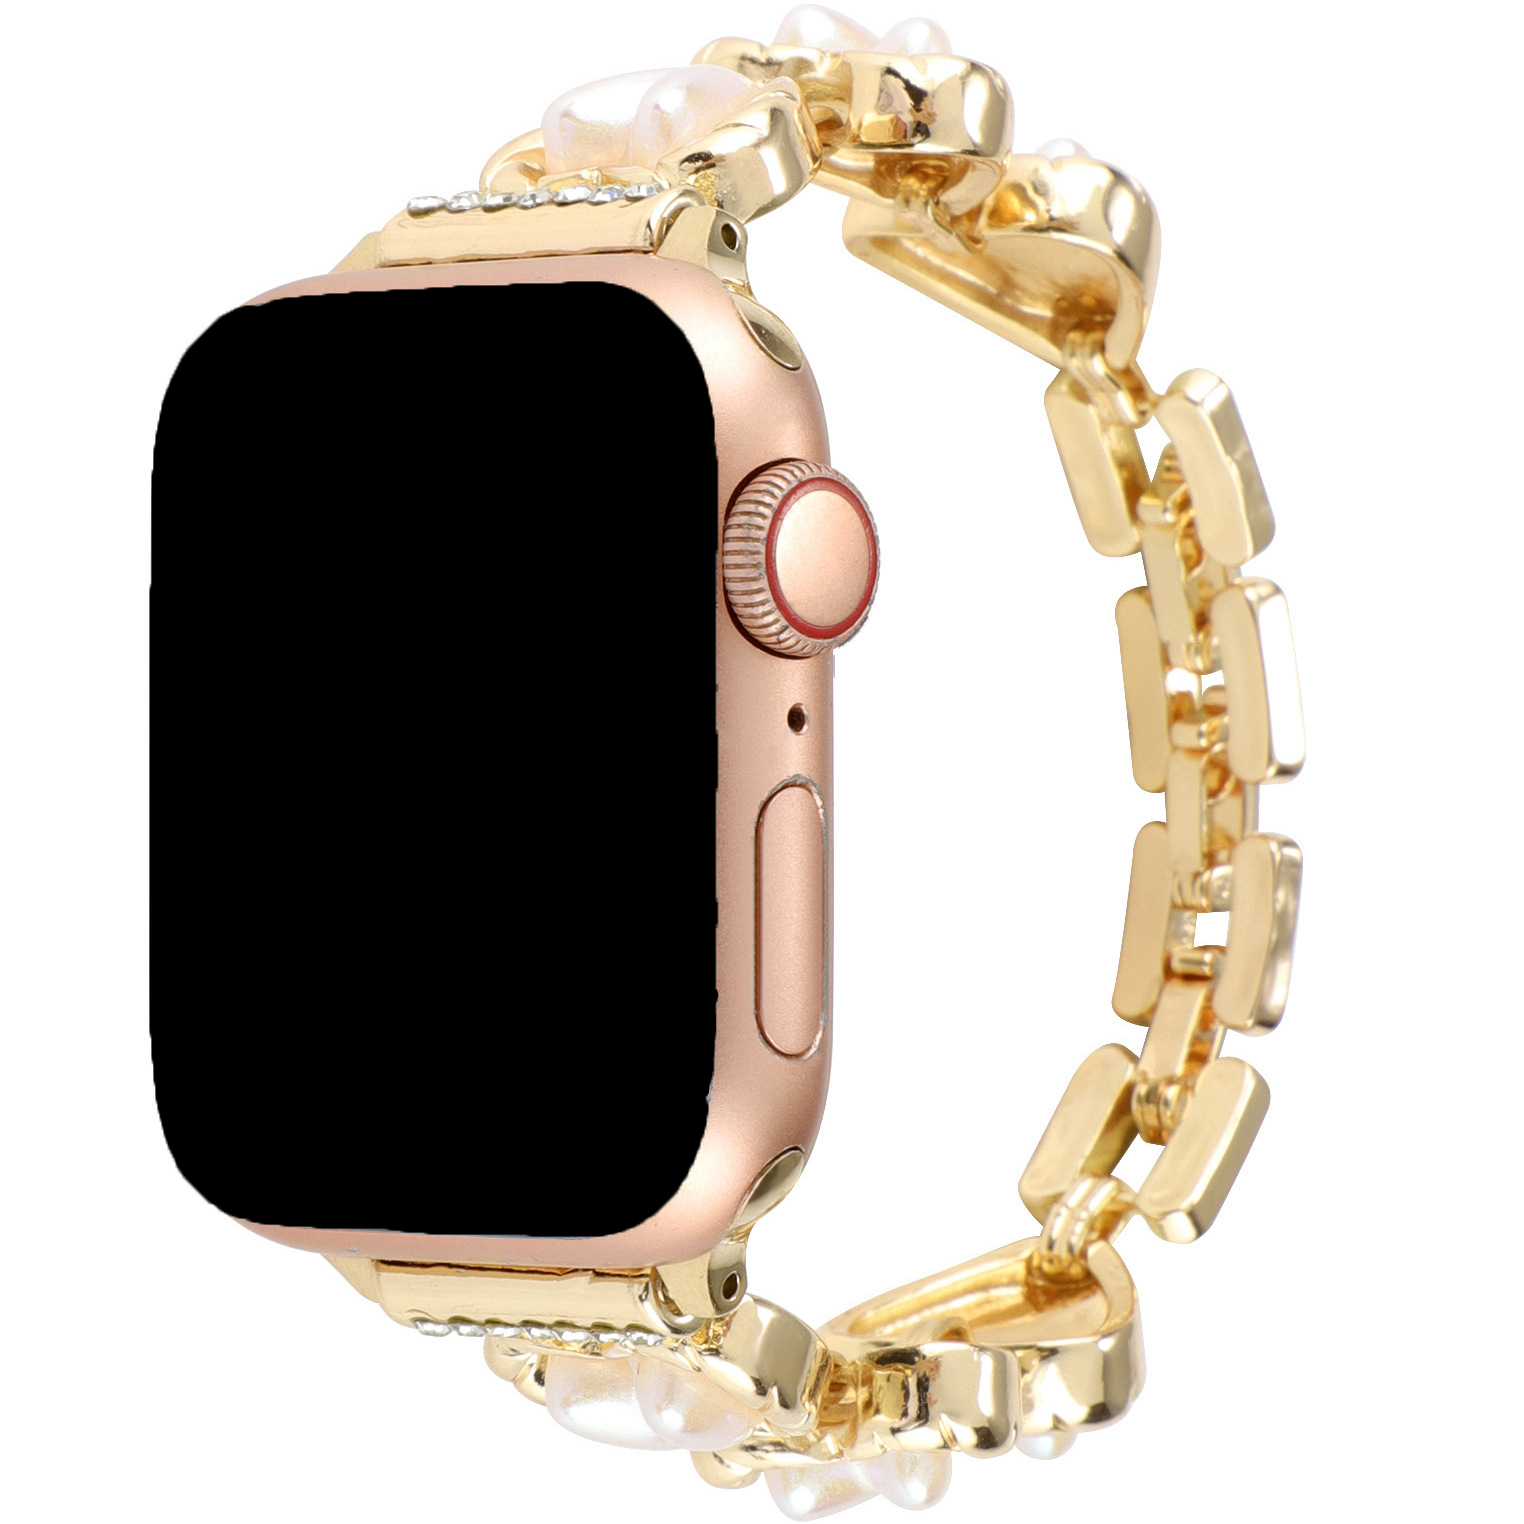 Apple Watch hart stalen schakel band - Demi goud